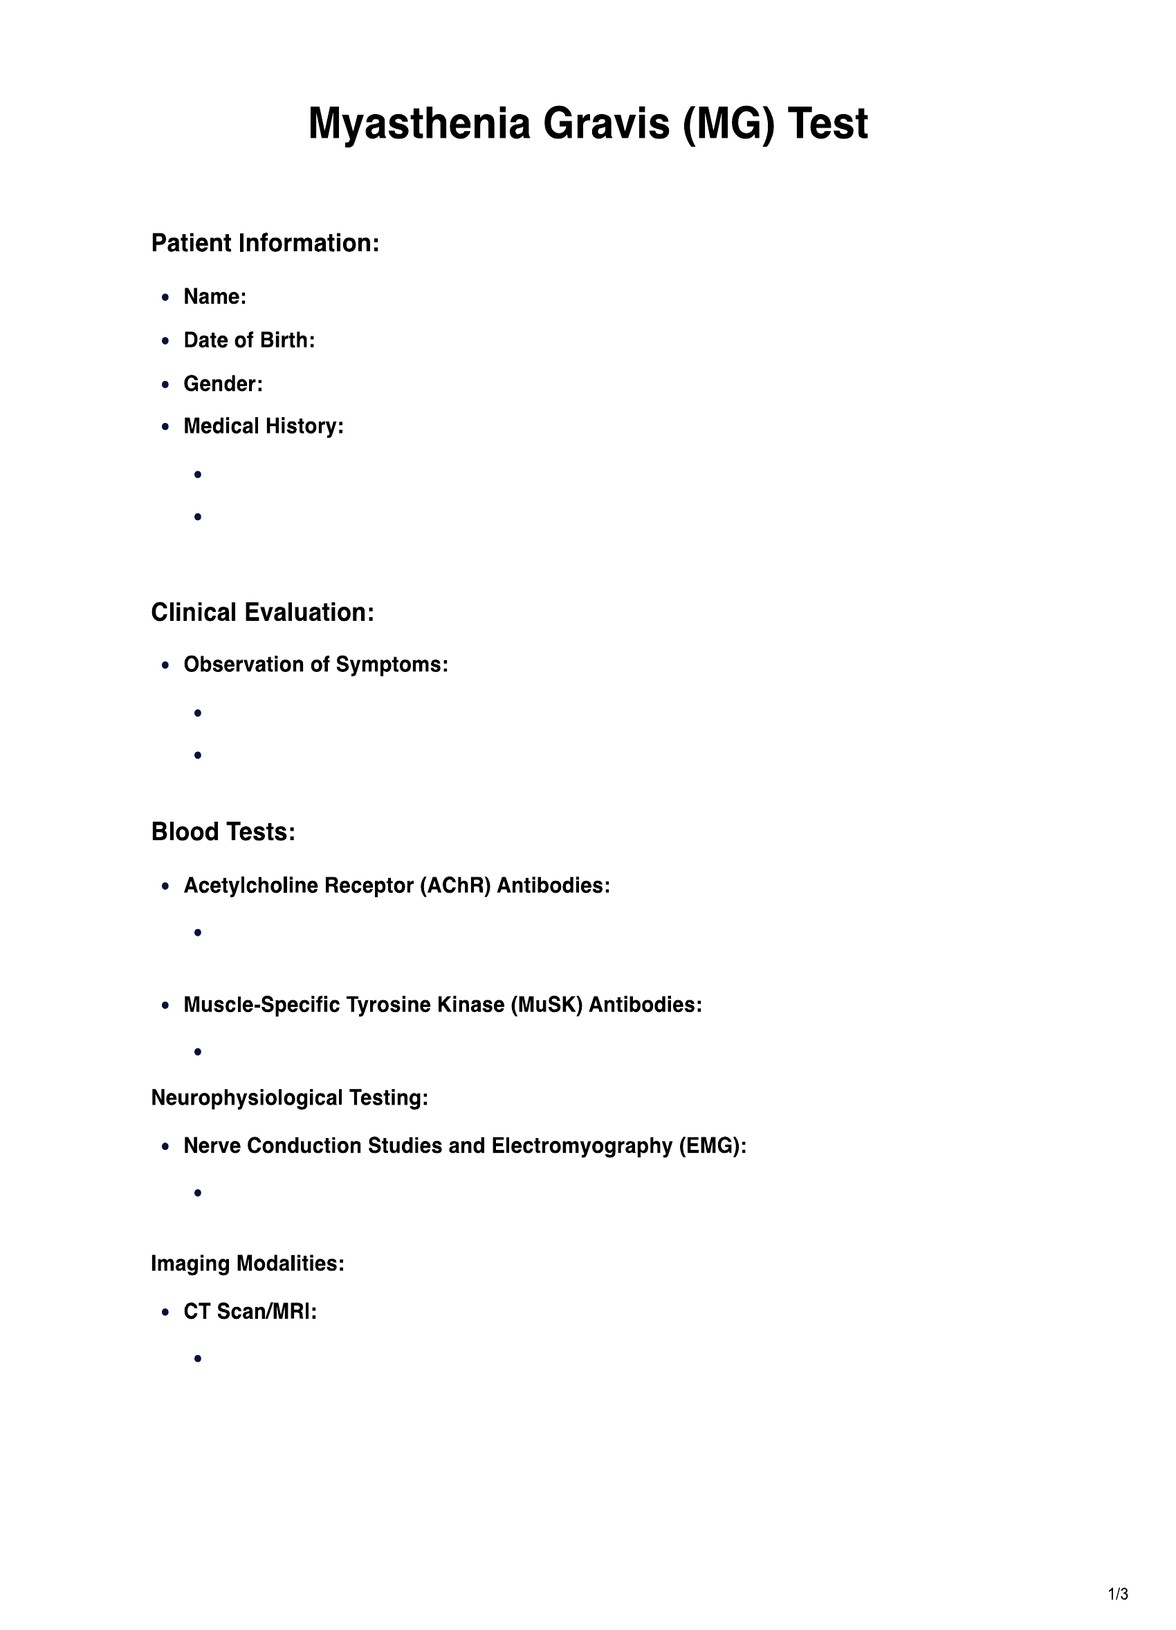 Myasthenia Gravis (MG) Test PDF Example